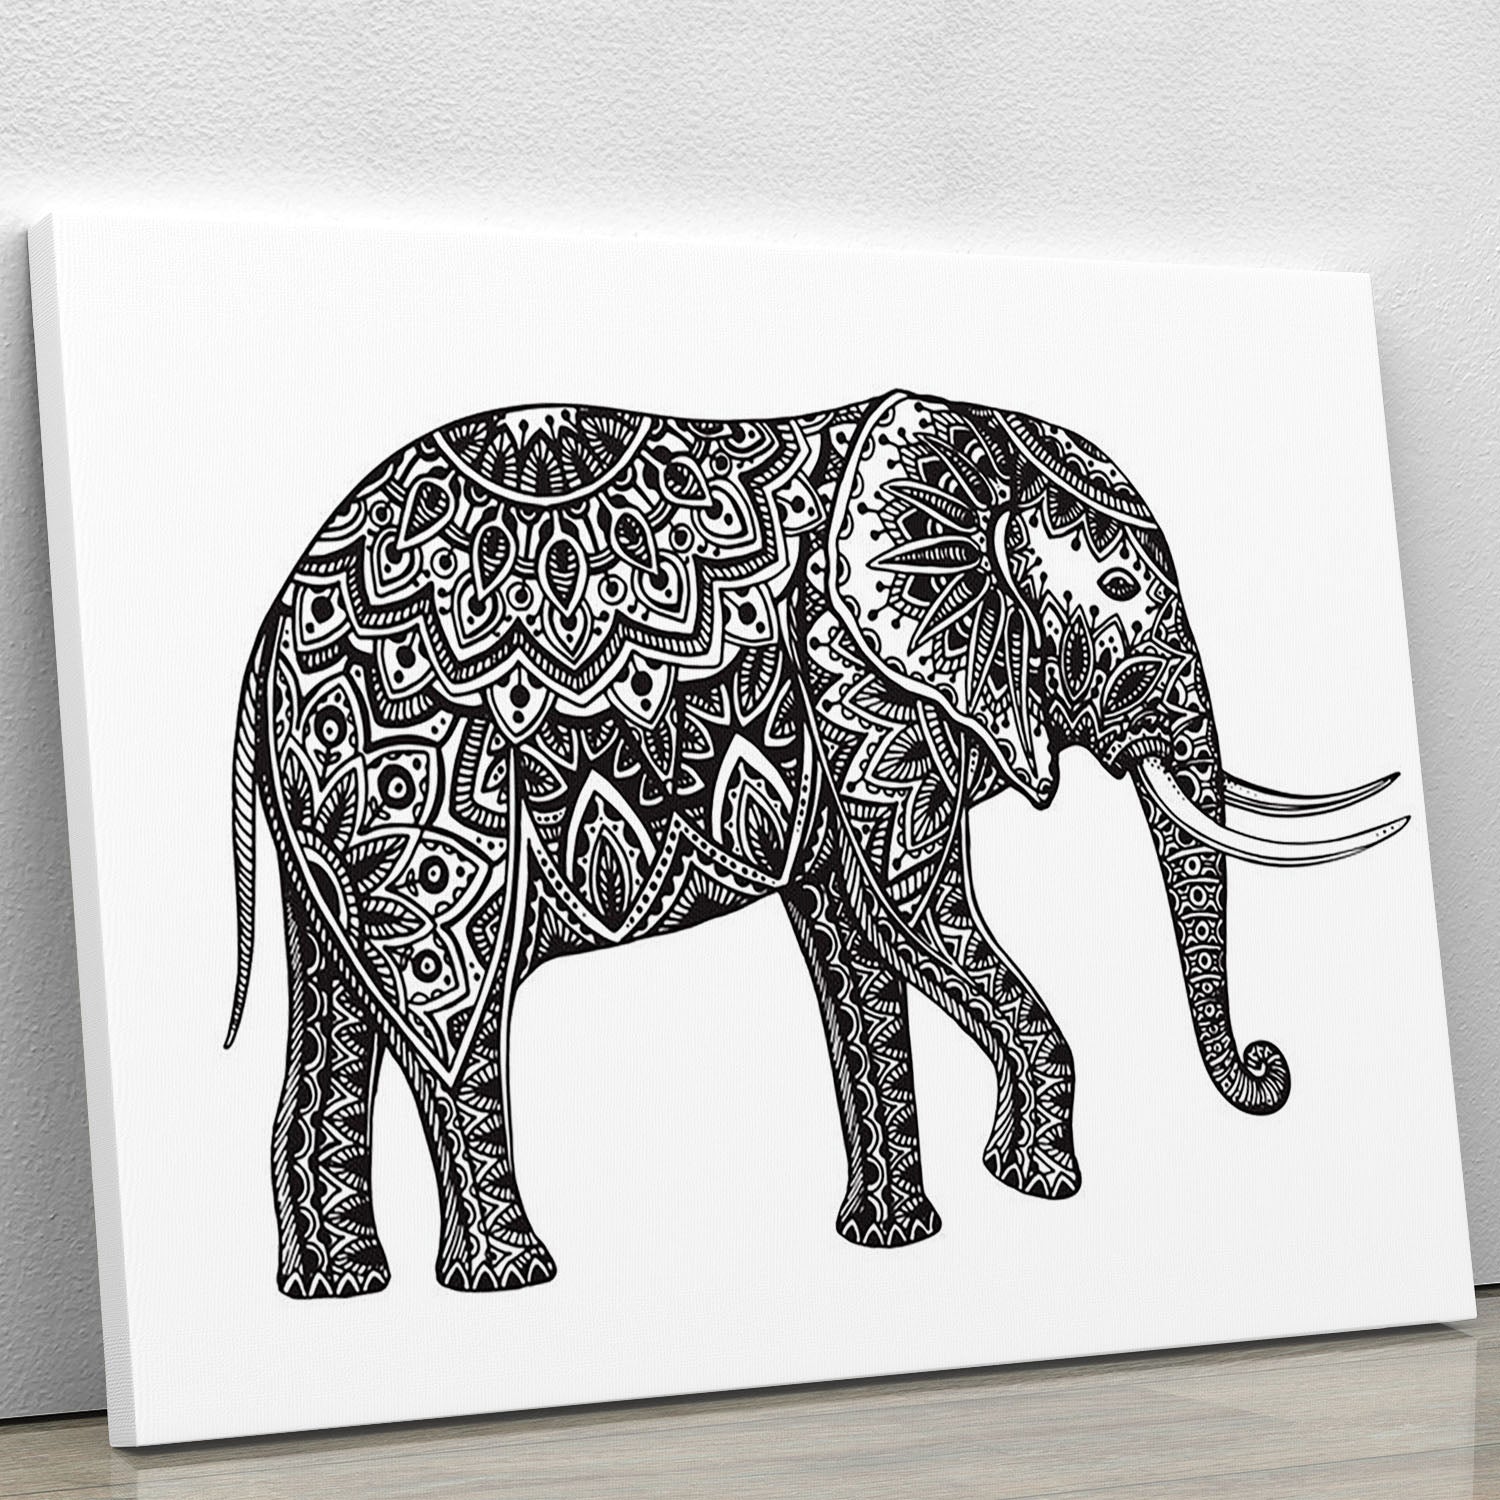 Stylized fantasy patterned elephant Canvas Print or Poster - Canvas Art Rocks - 1